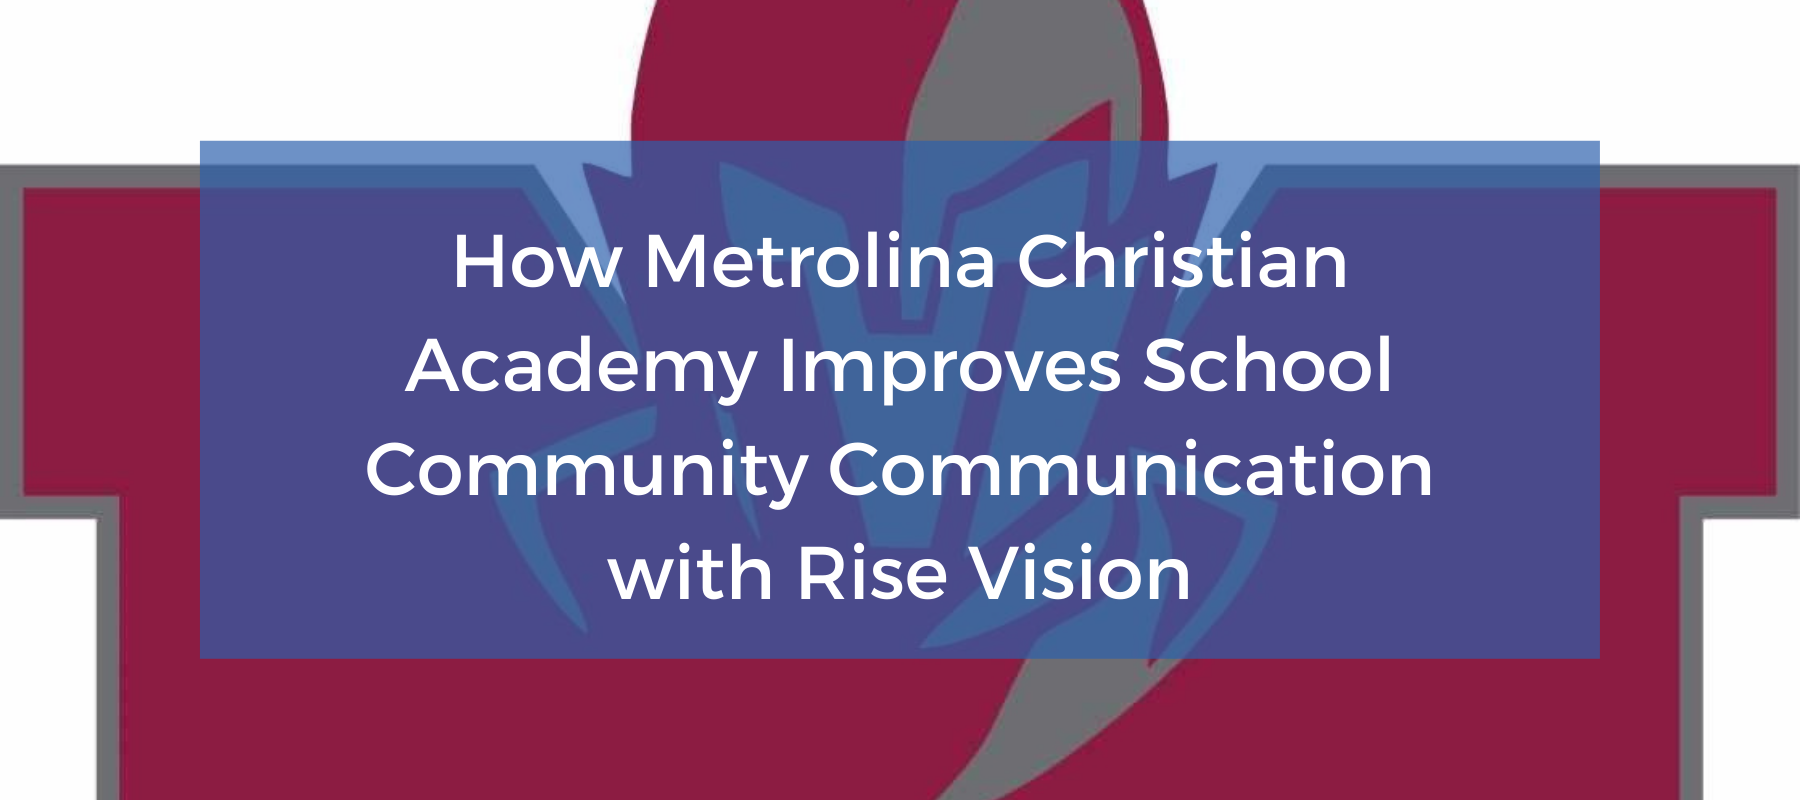 Metrolina Christian Academy featured blog image.